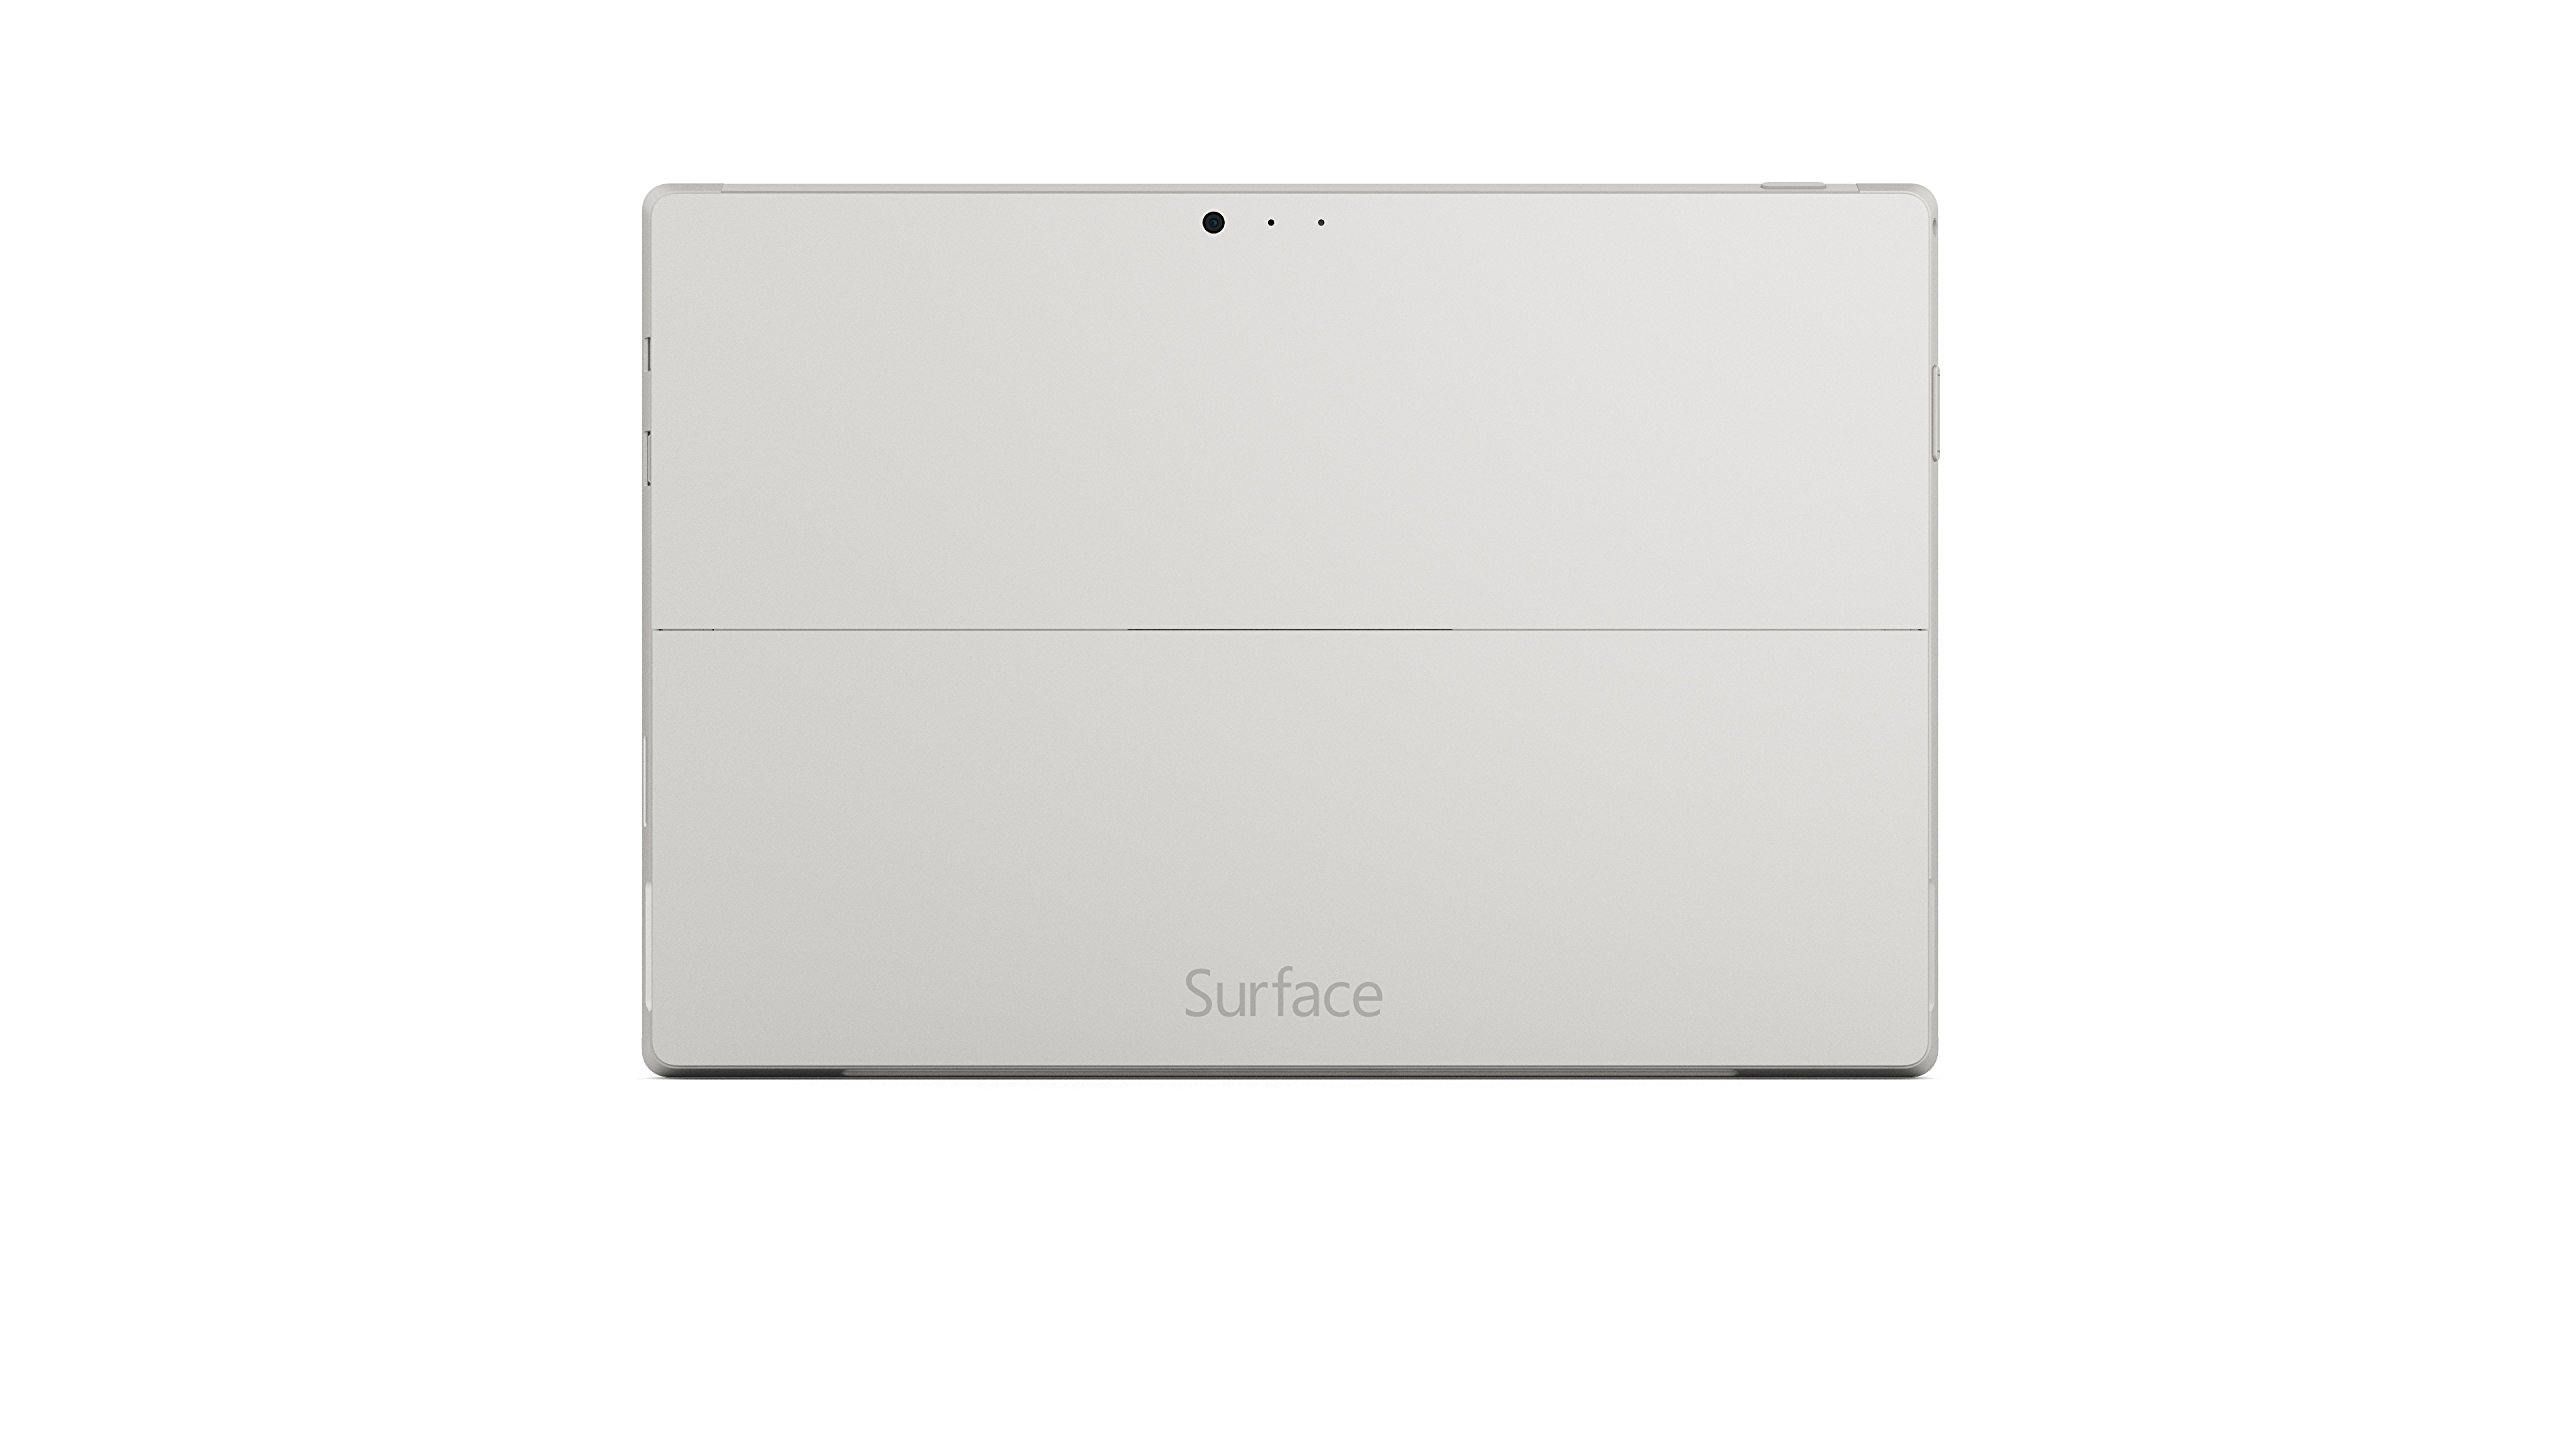 Microsoft Surface Pro 3 (256 GB, Intel Core i7, Windows 8.1) - Free Windows 10 Upgrade